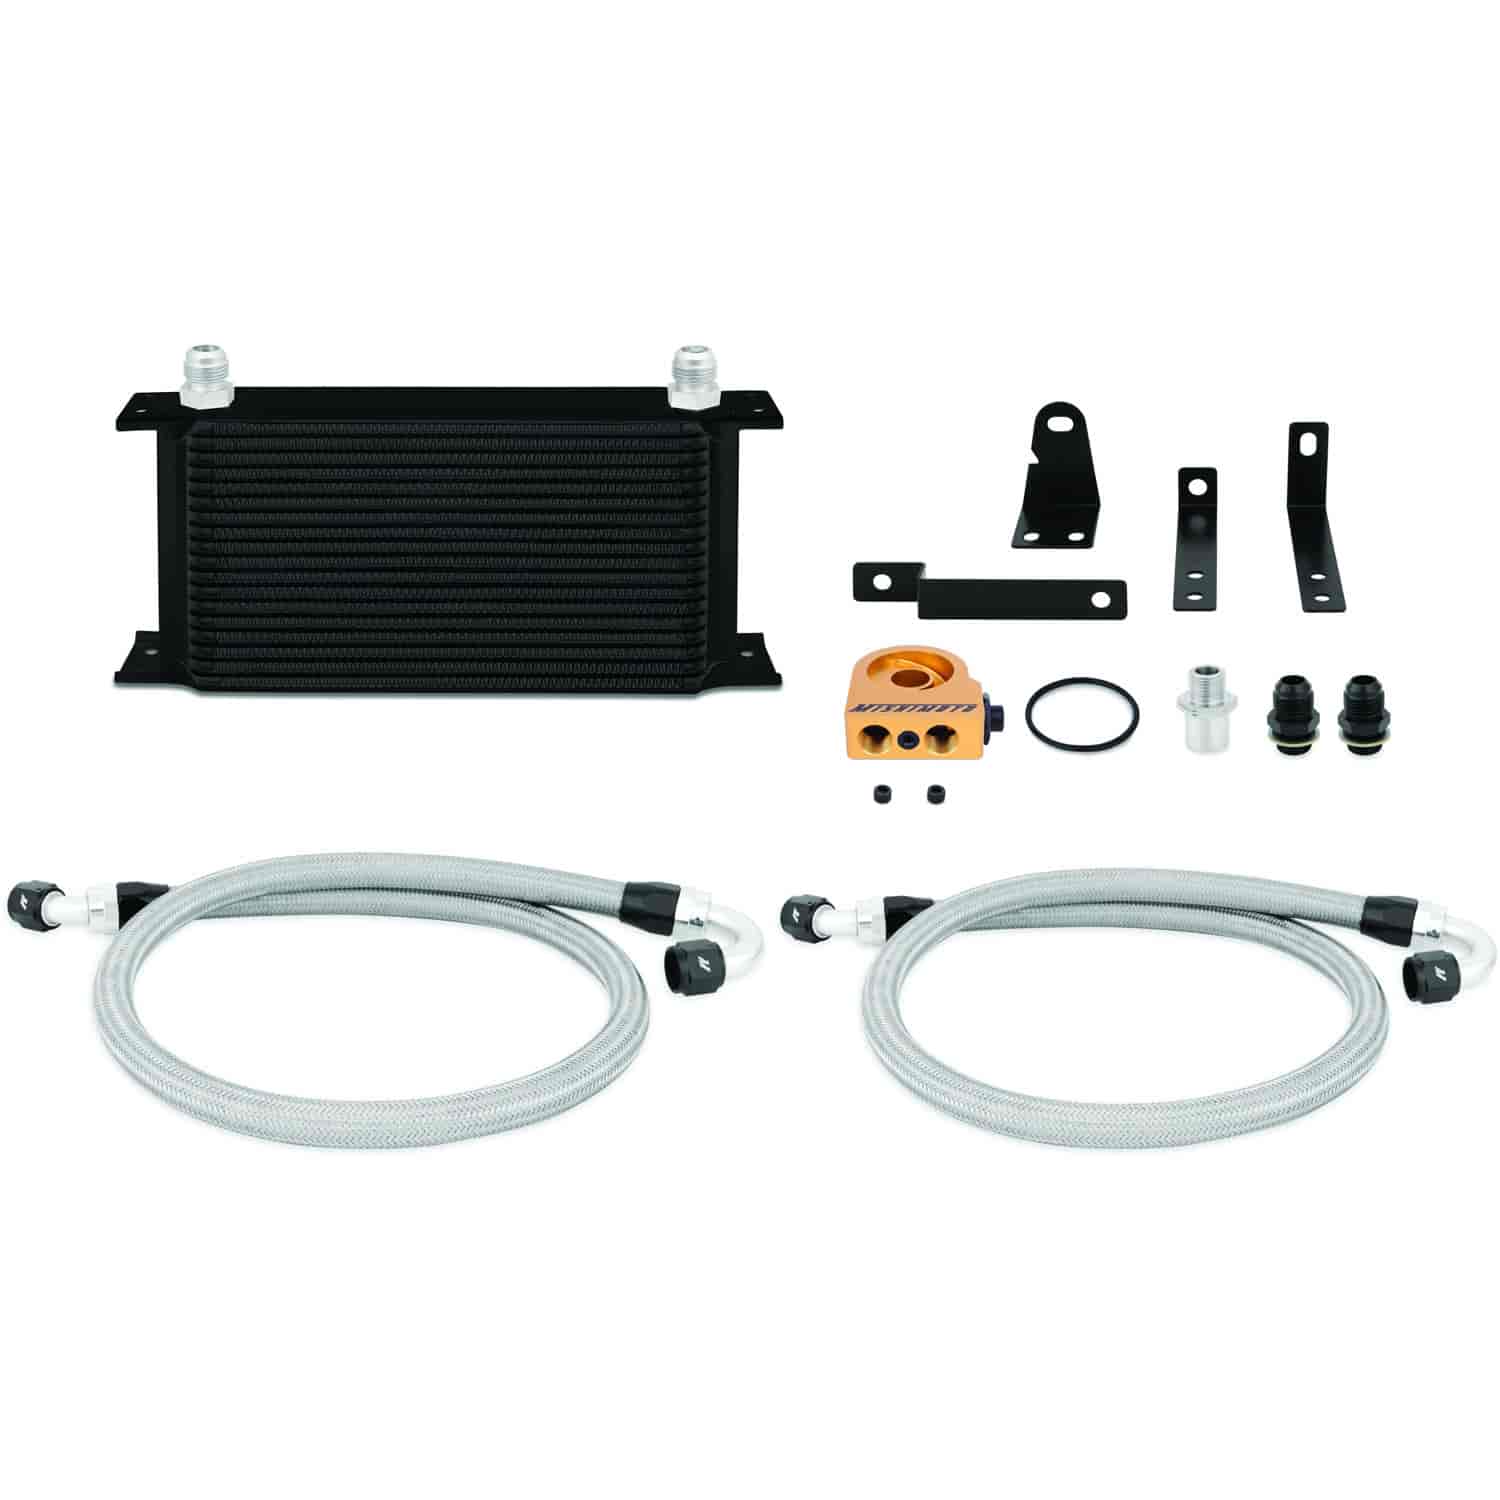 Honda S2000 Thermostatic Oil Cooler Kit Black - MFG Part No. MMOC-S2K-00TBK